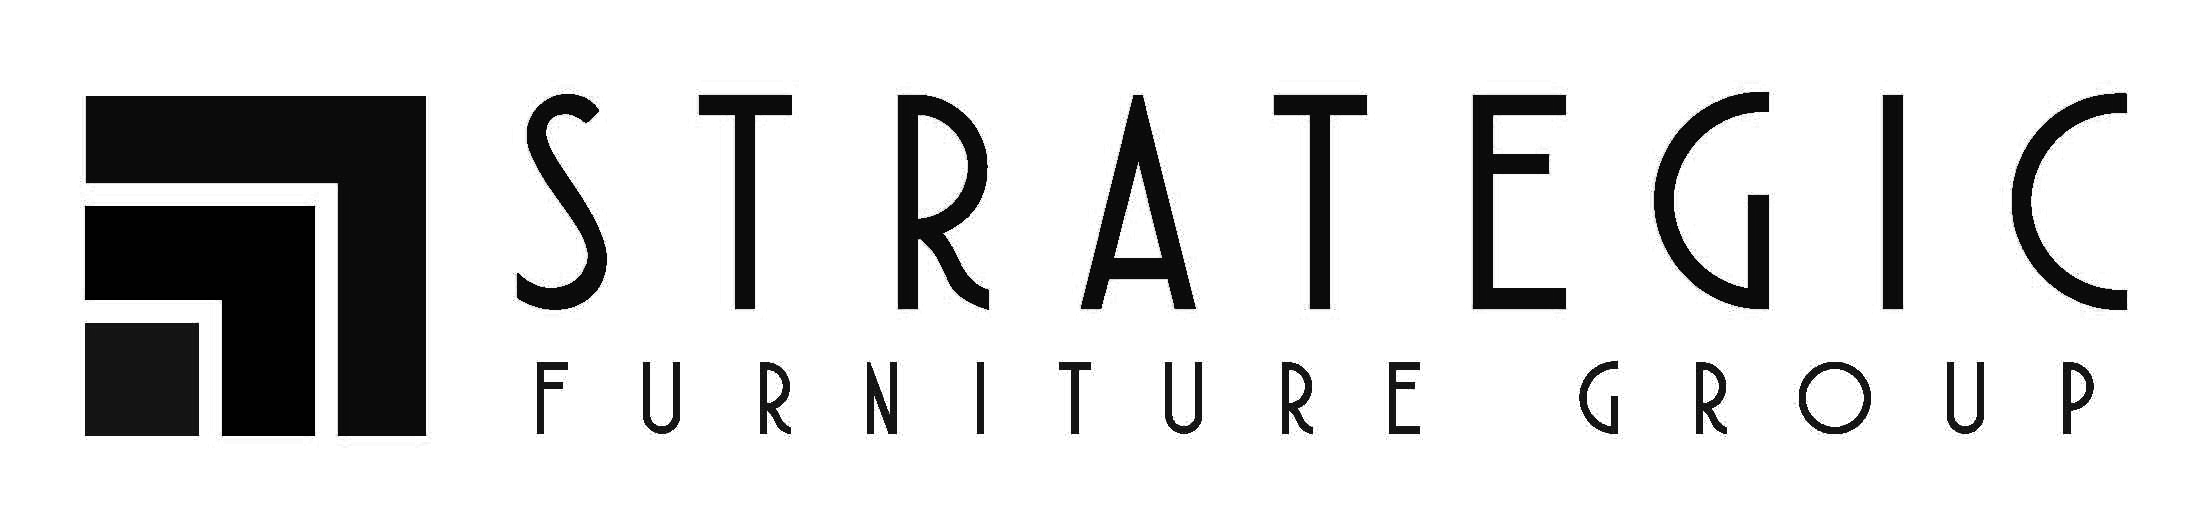 Strategic Furniture Group logo.jpg